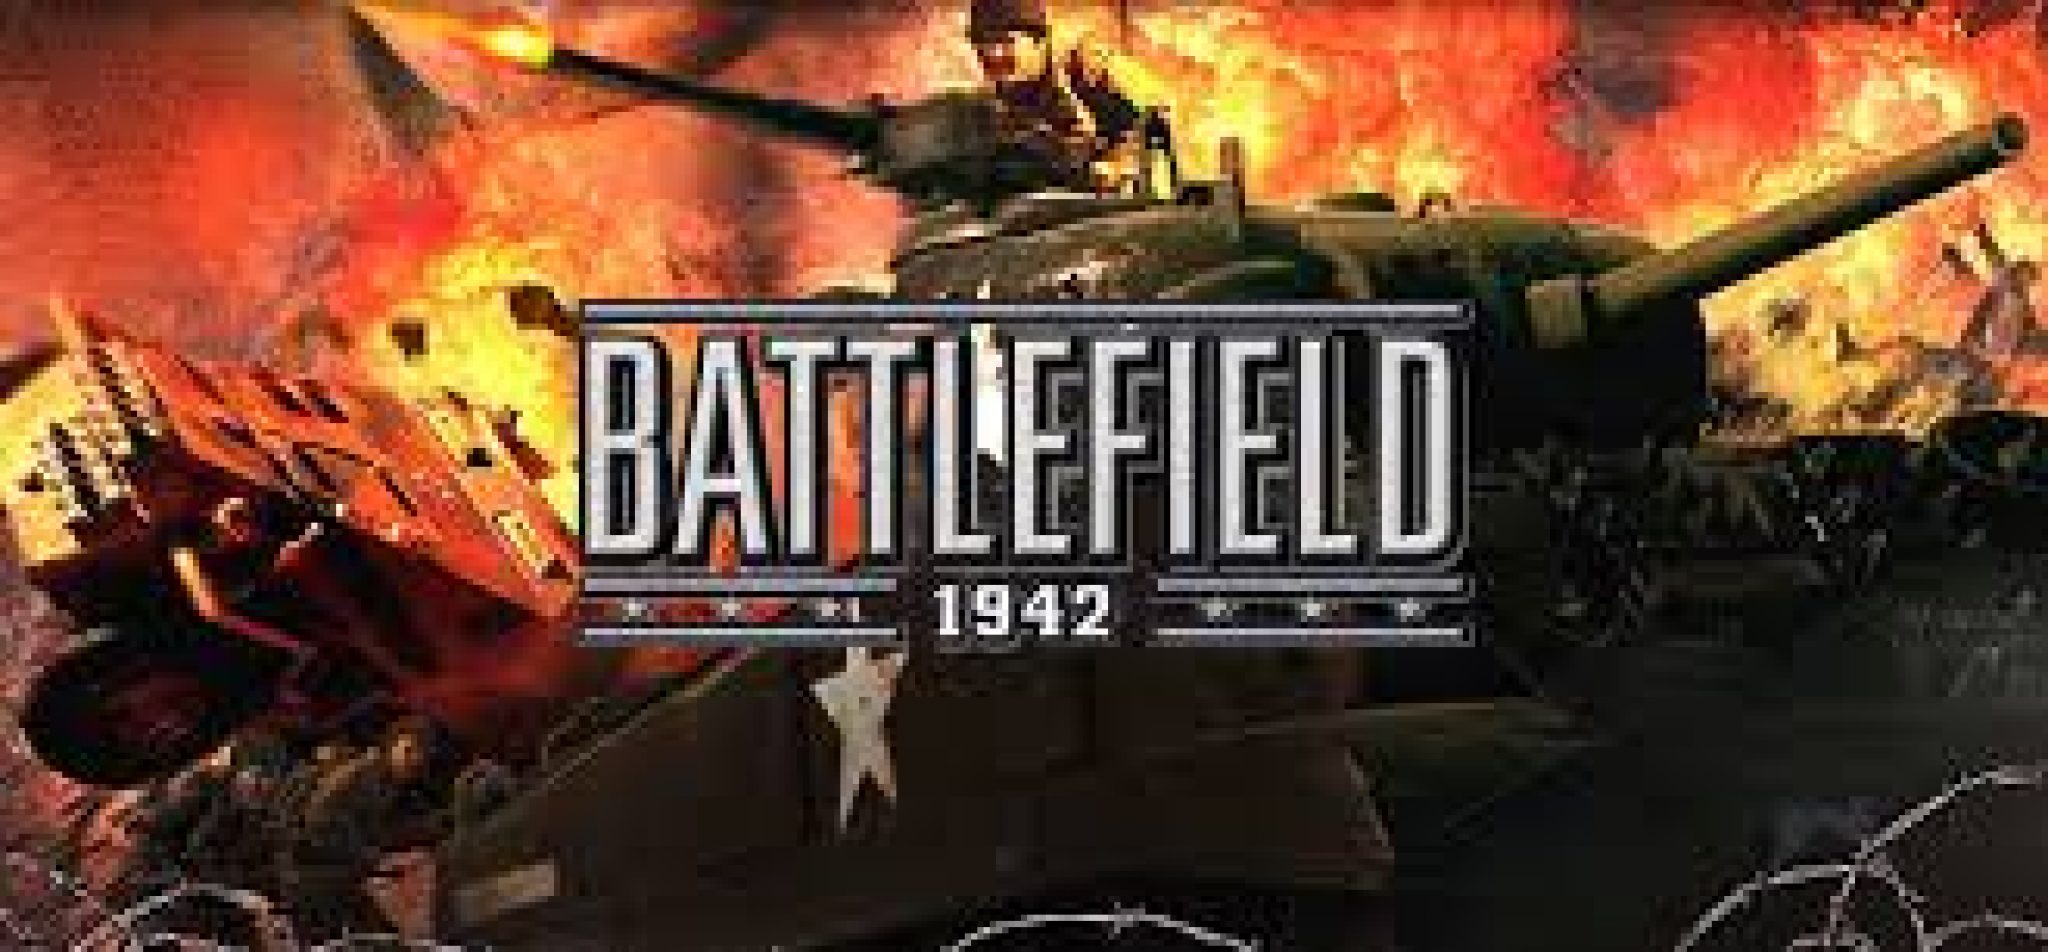 battlefield 1942 download pc